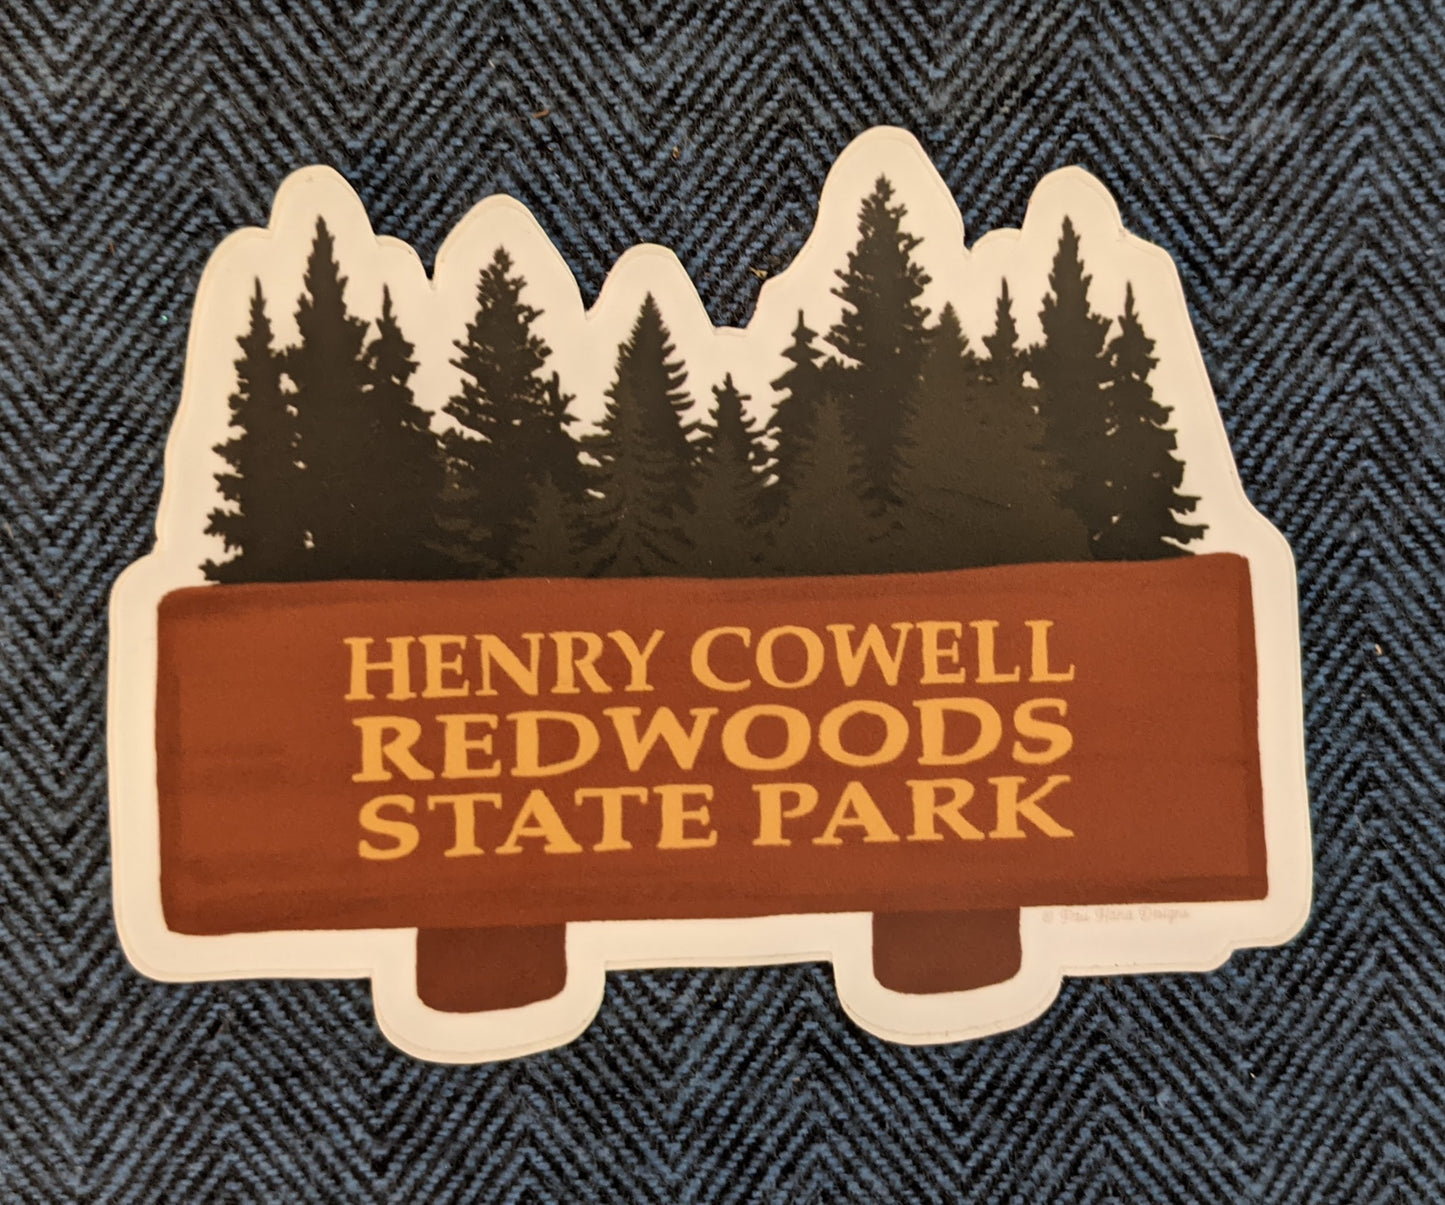 Henry Cowell Redwoods State Park sticker by Pau Hana Designs